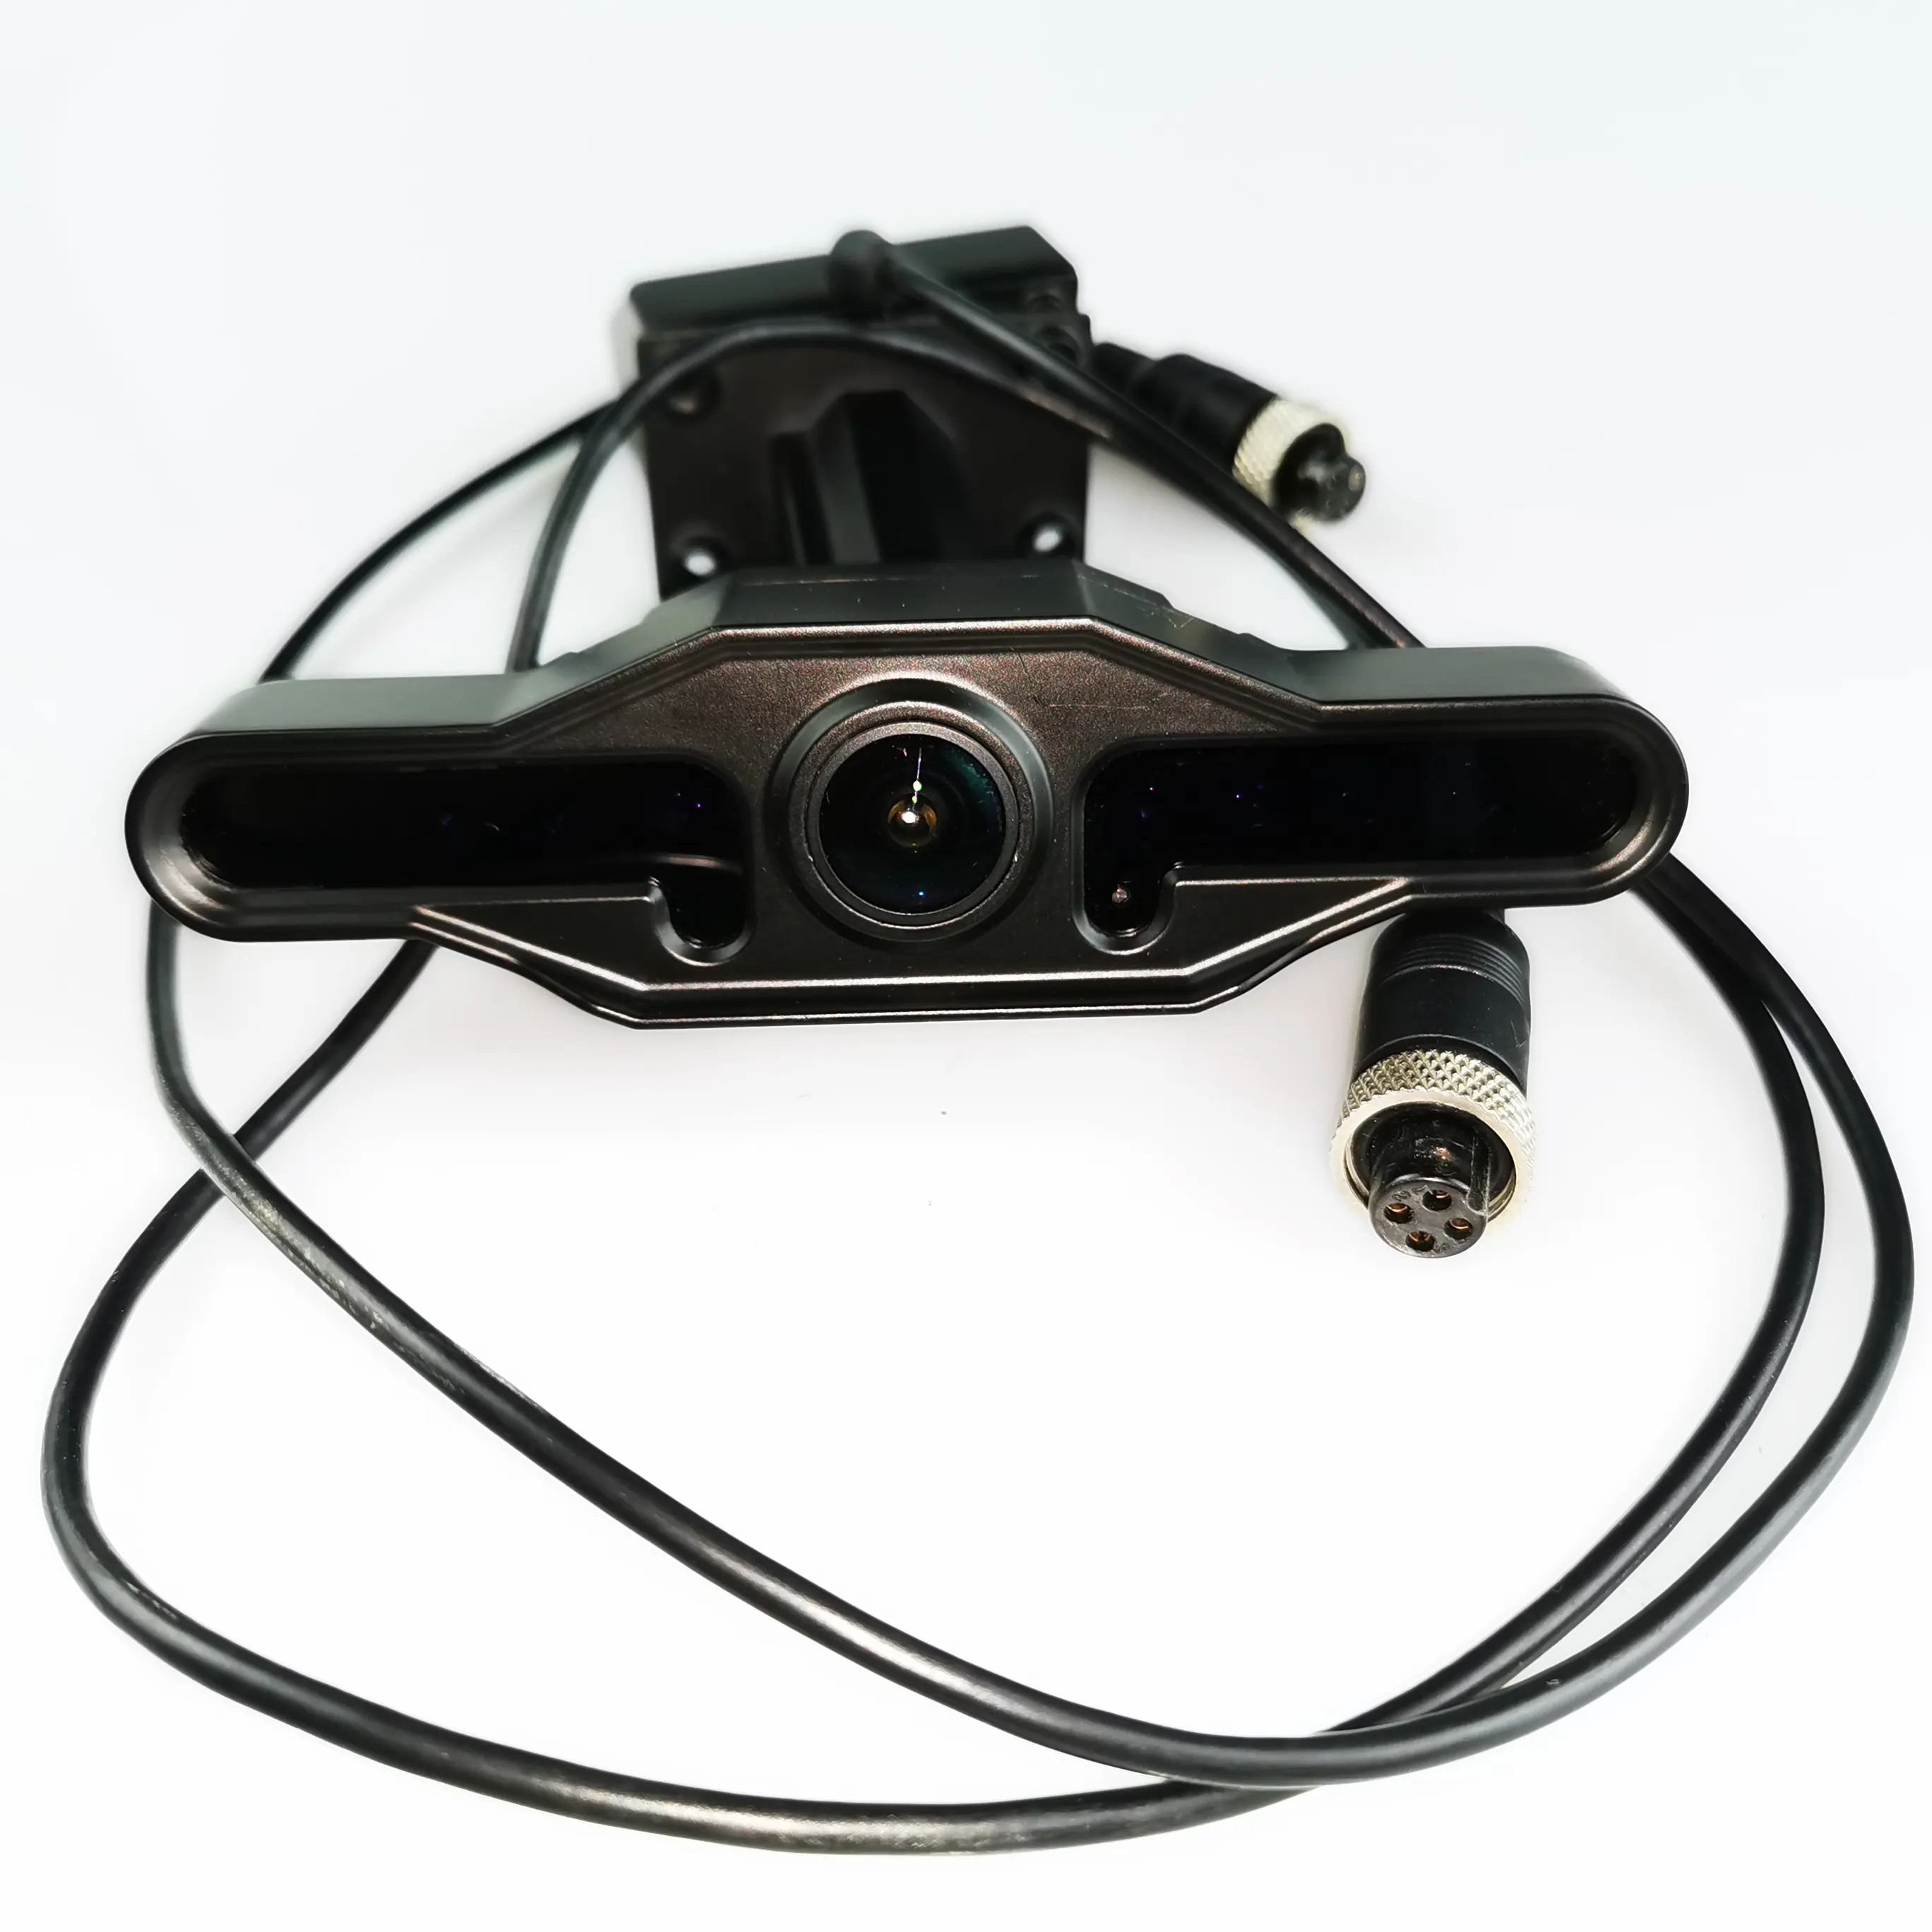 Modell VC-801-AHD960P Dual Lens Hoch auflösende Kamera mit Frontkamera und Rückfahr kamera Auto.